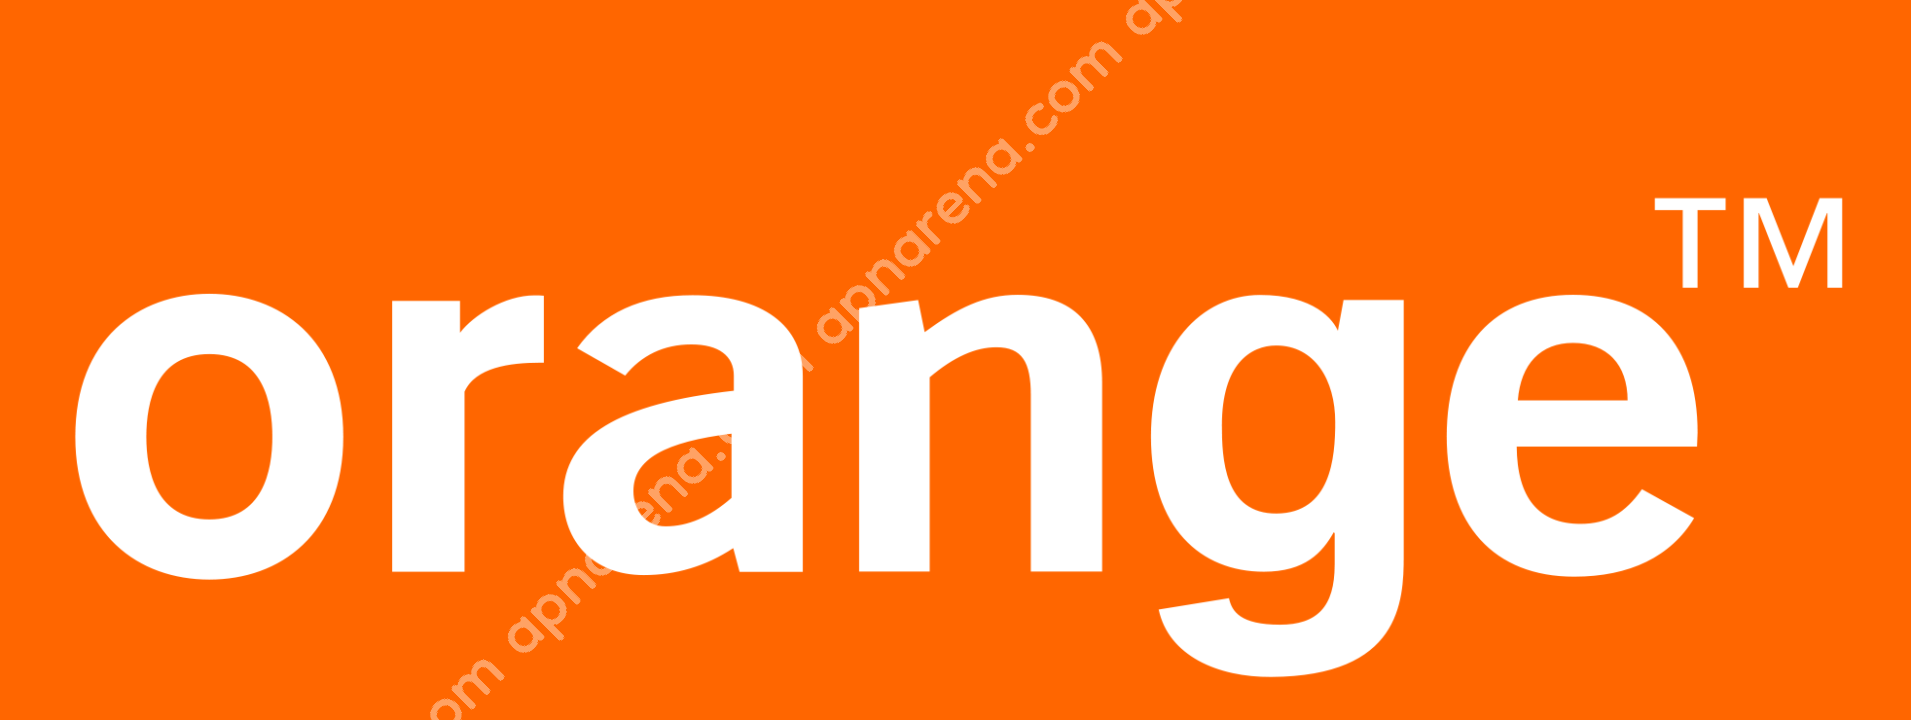 Orange Cameroon APN Internet Settings Android iPhone